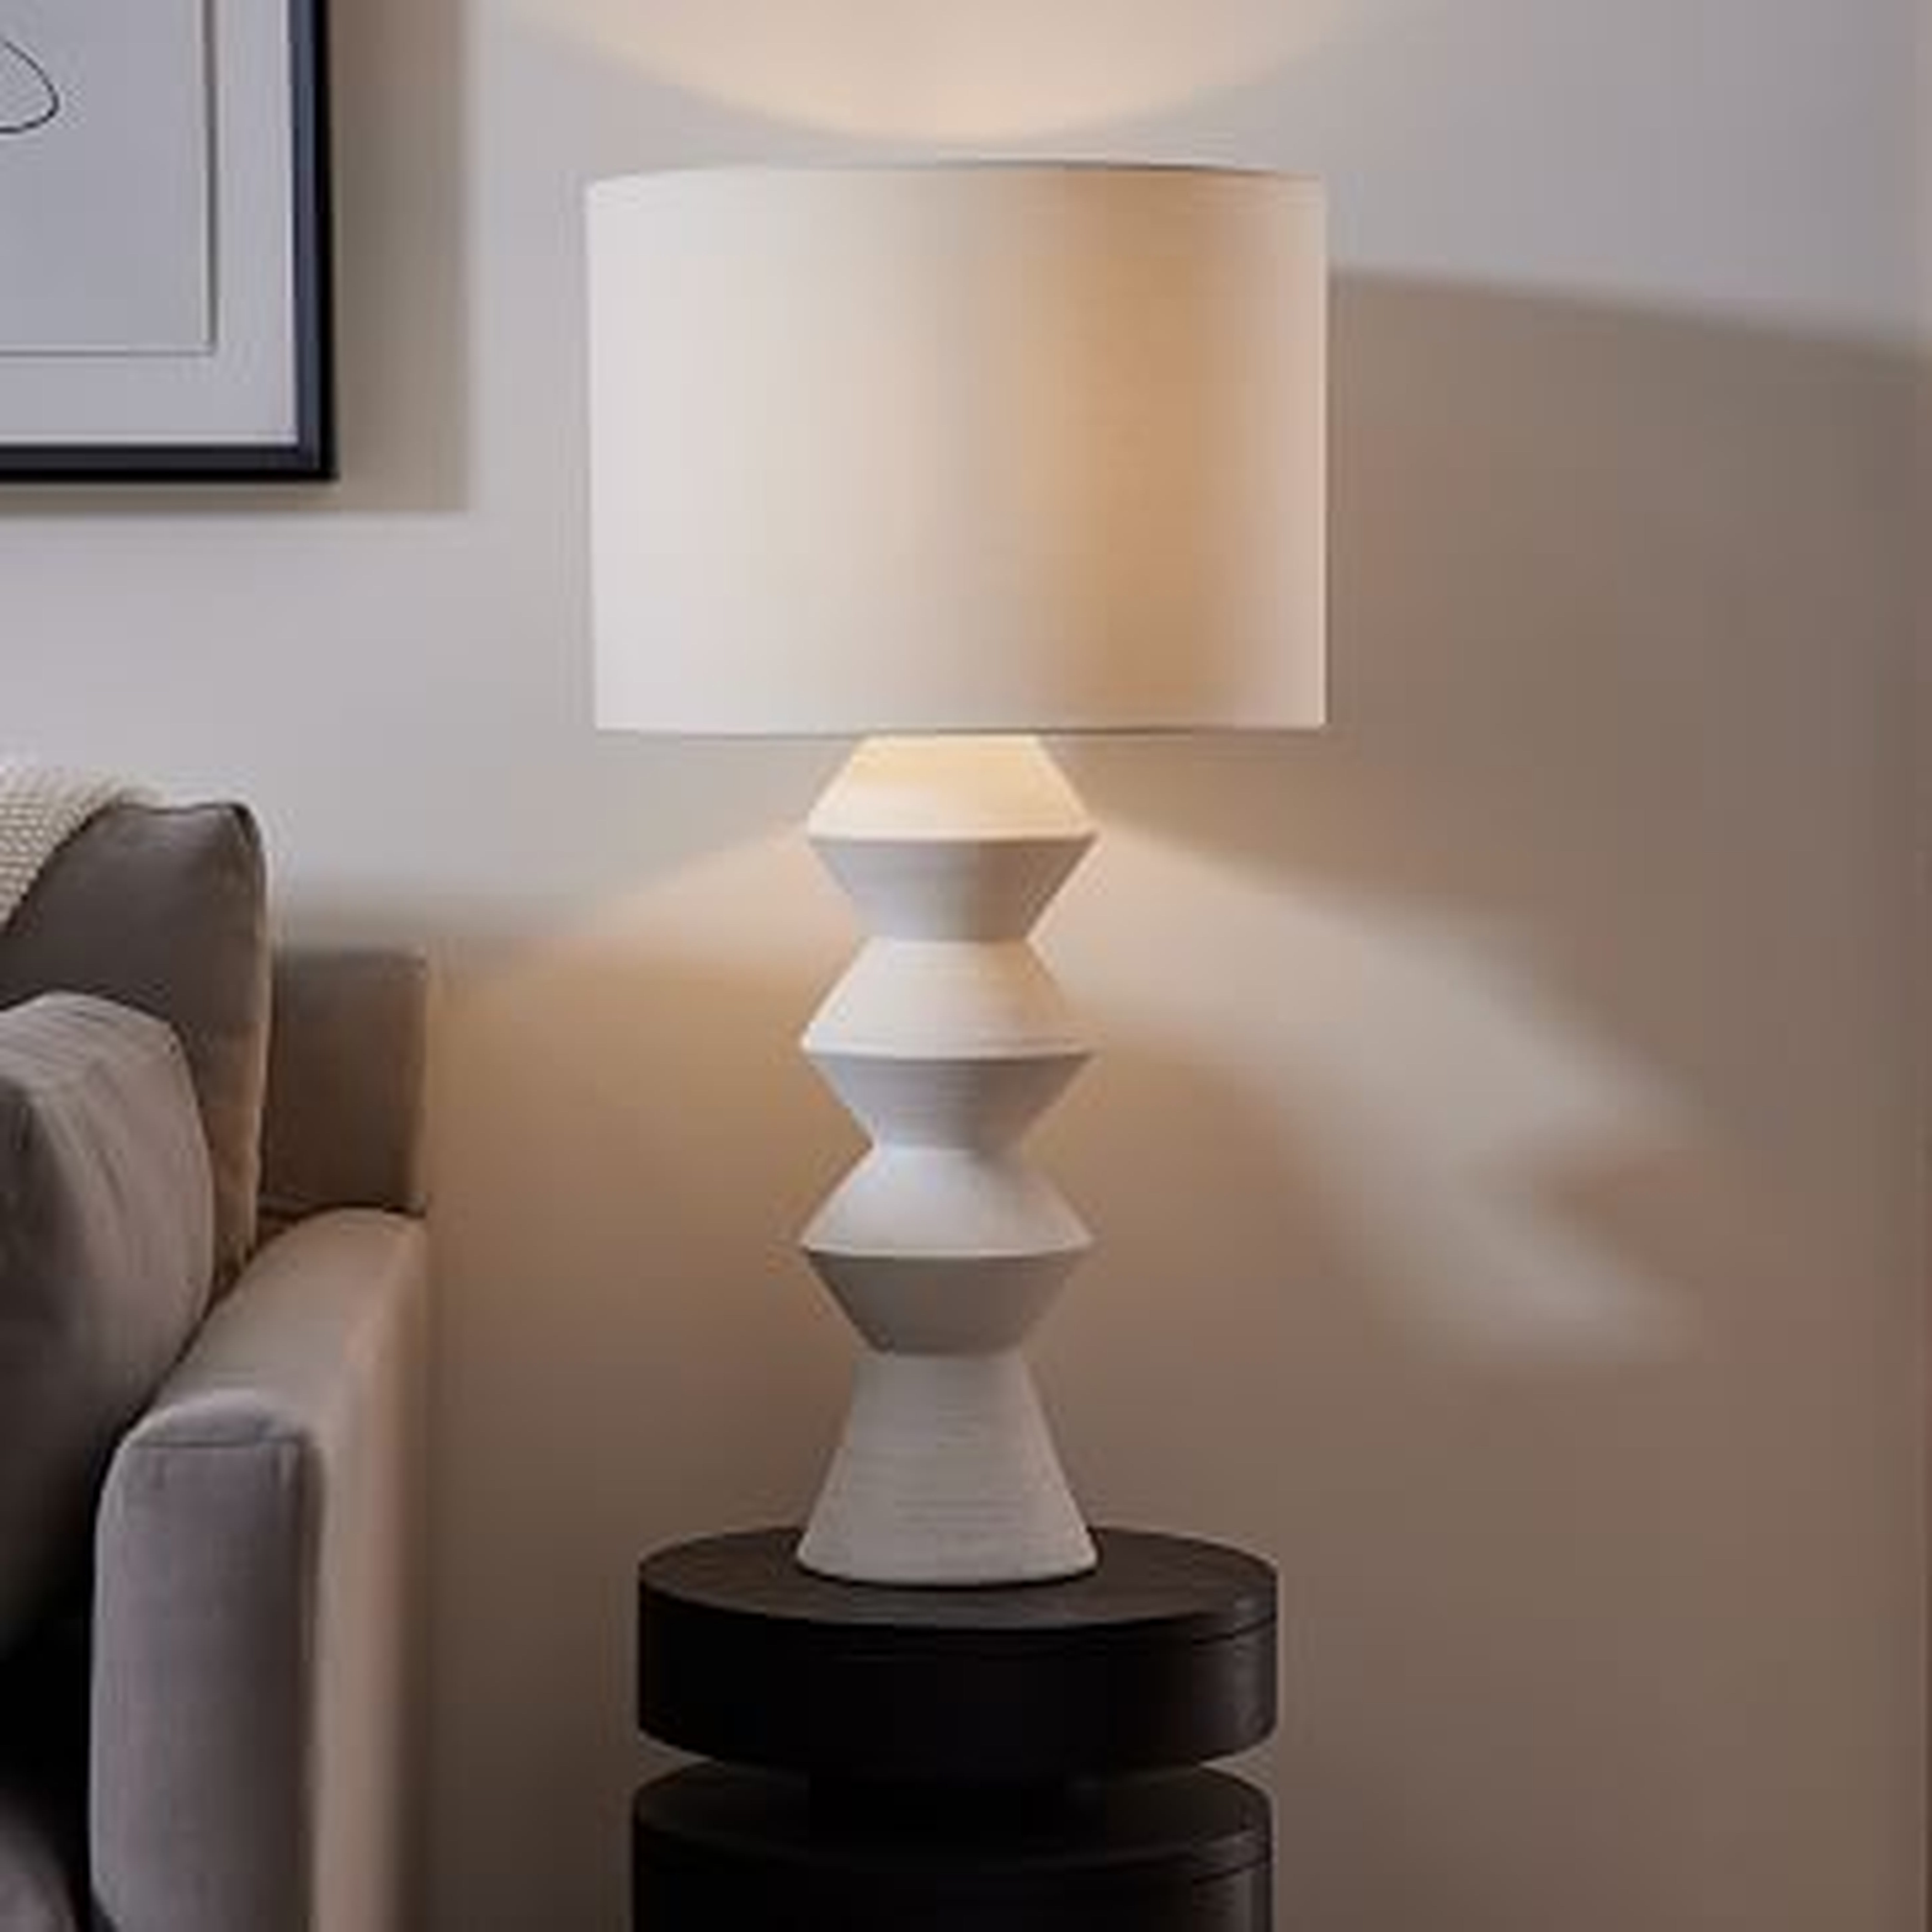 Diego Olivero Ceramic Shapes Table Lamp, 27", 11" Shade, White/White Linen - West Elm